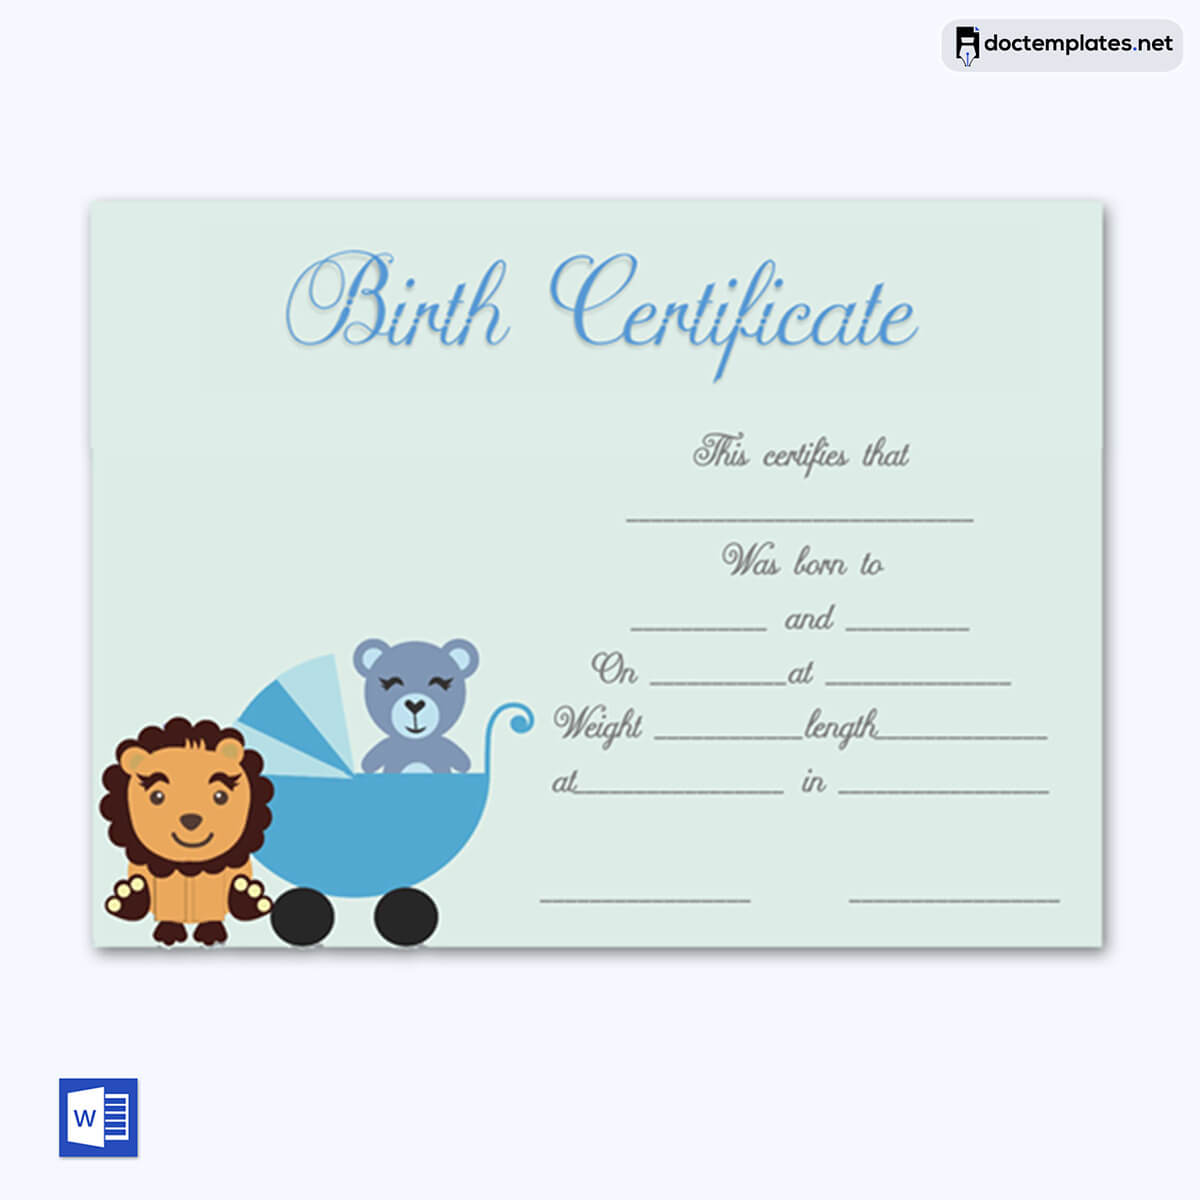 
make a birth certificate online
05